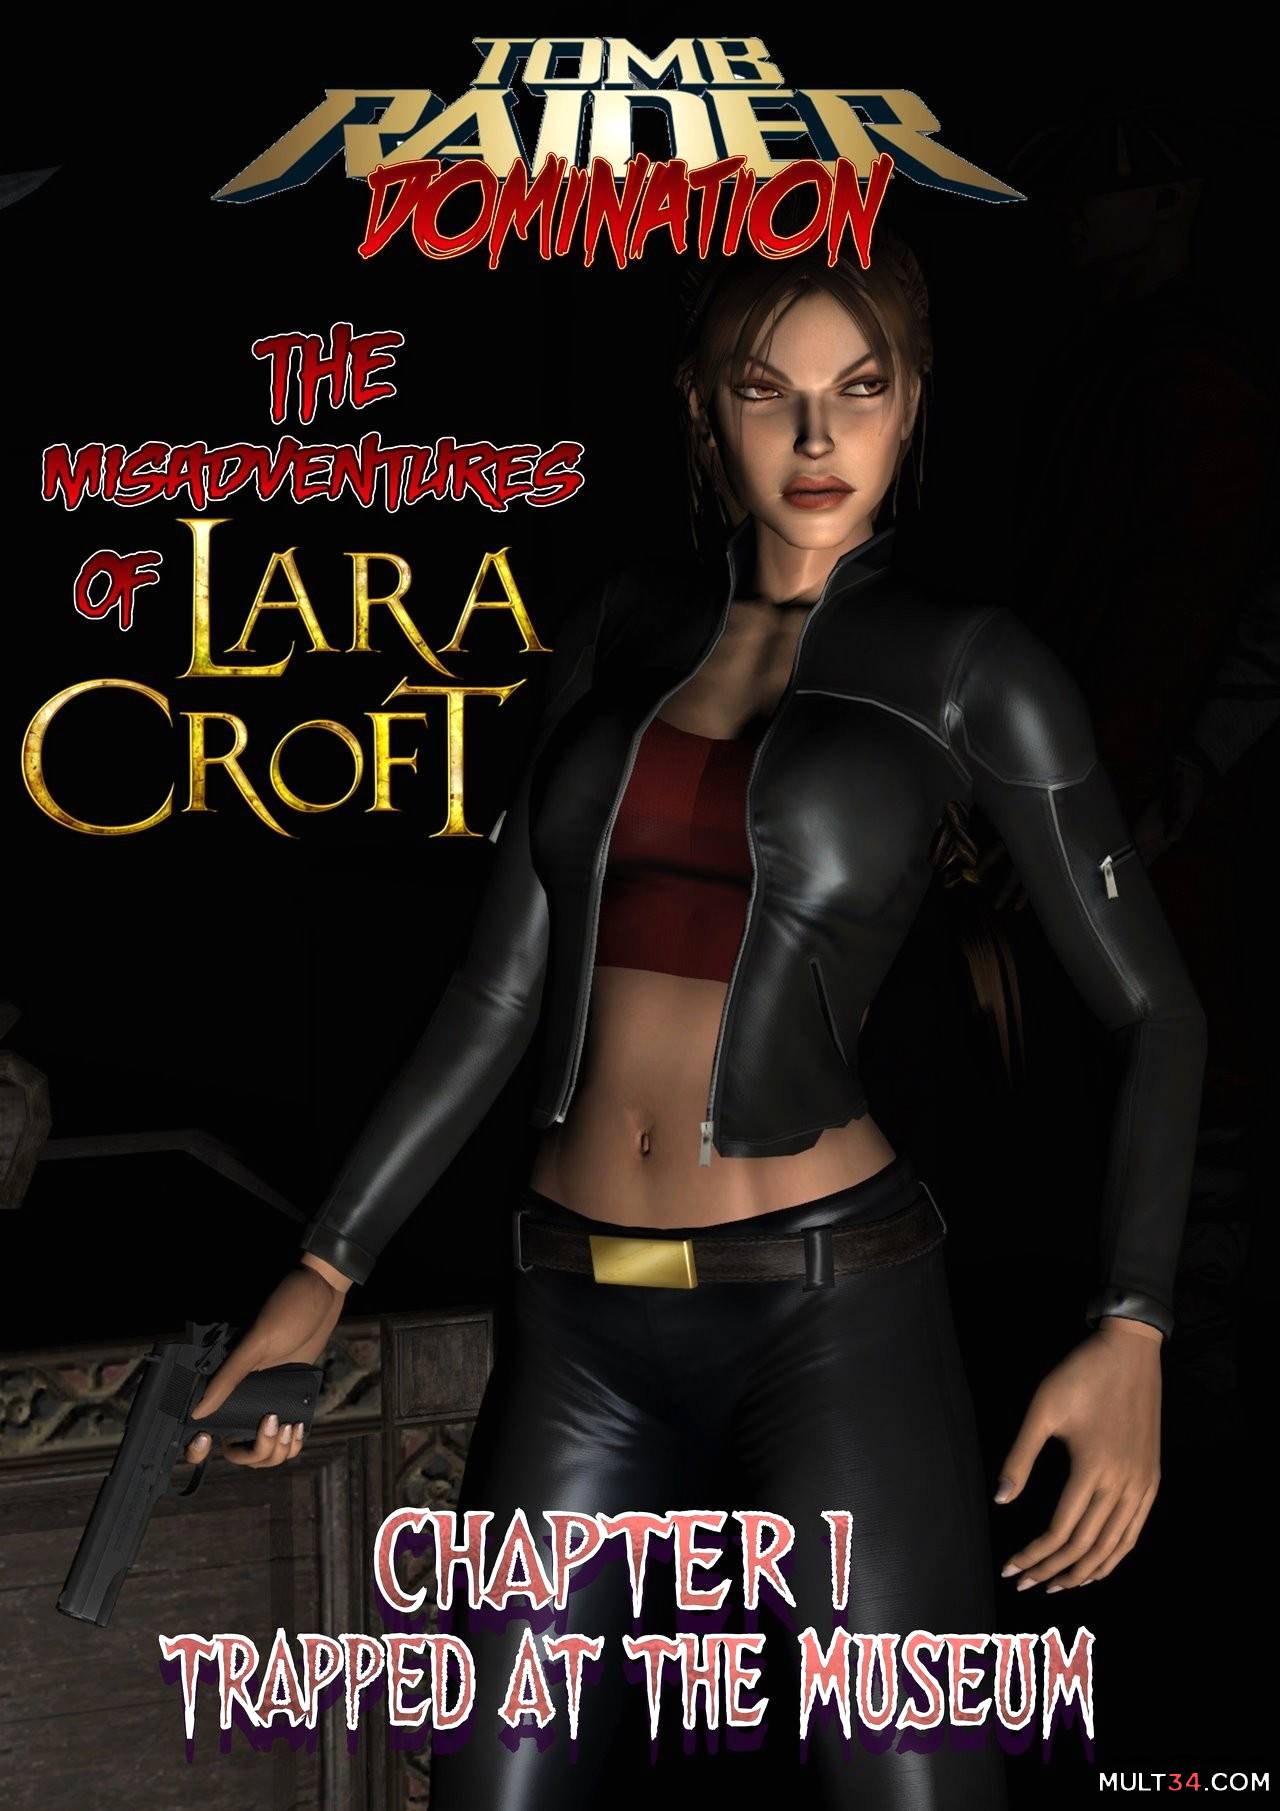 Lara Croft Cosplay Porn Captions - Tomb Raider Domination -The Misadventures of Lara Croft - chapter 1 porn  comic - the best cartoon porn comics, Rule 34 | MULT34